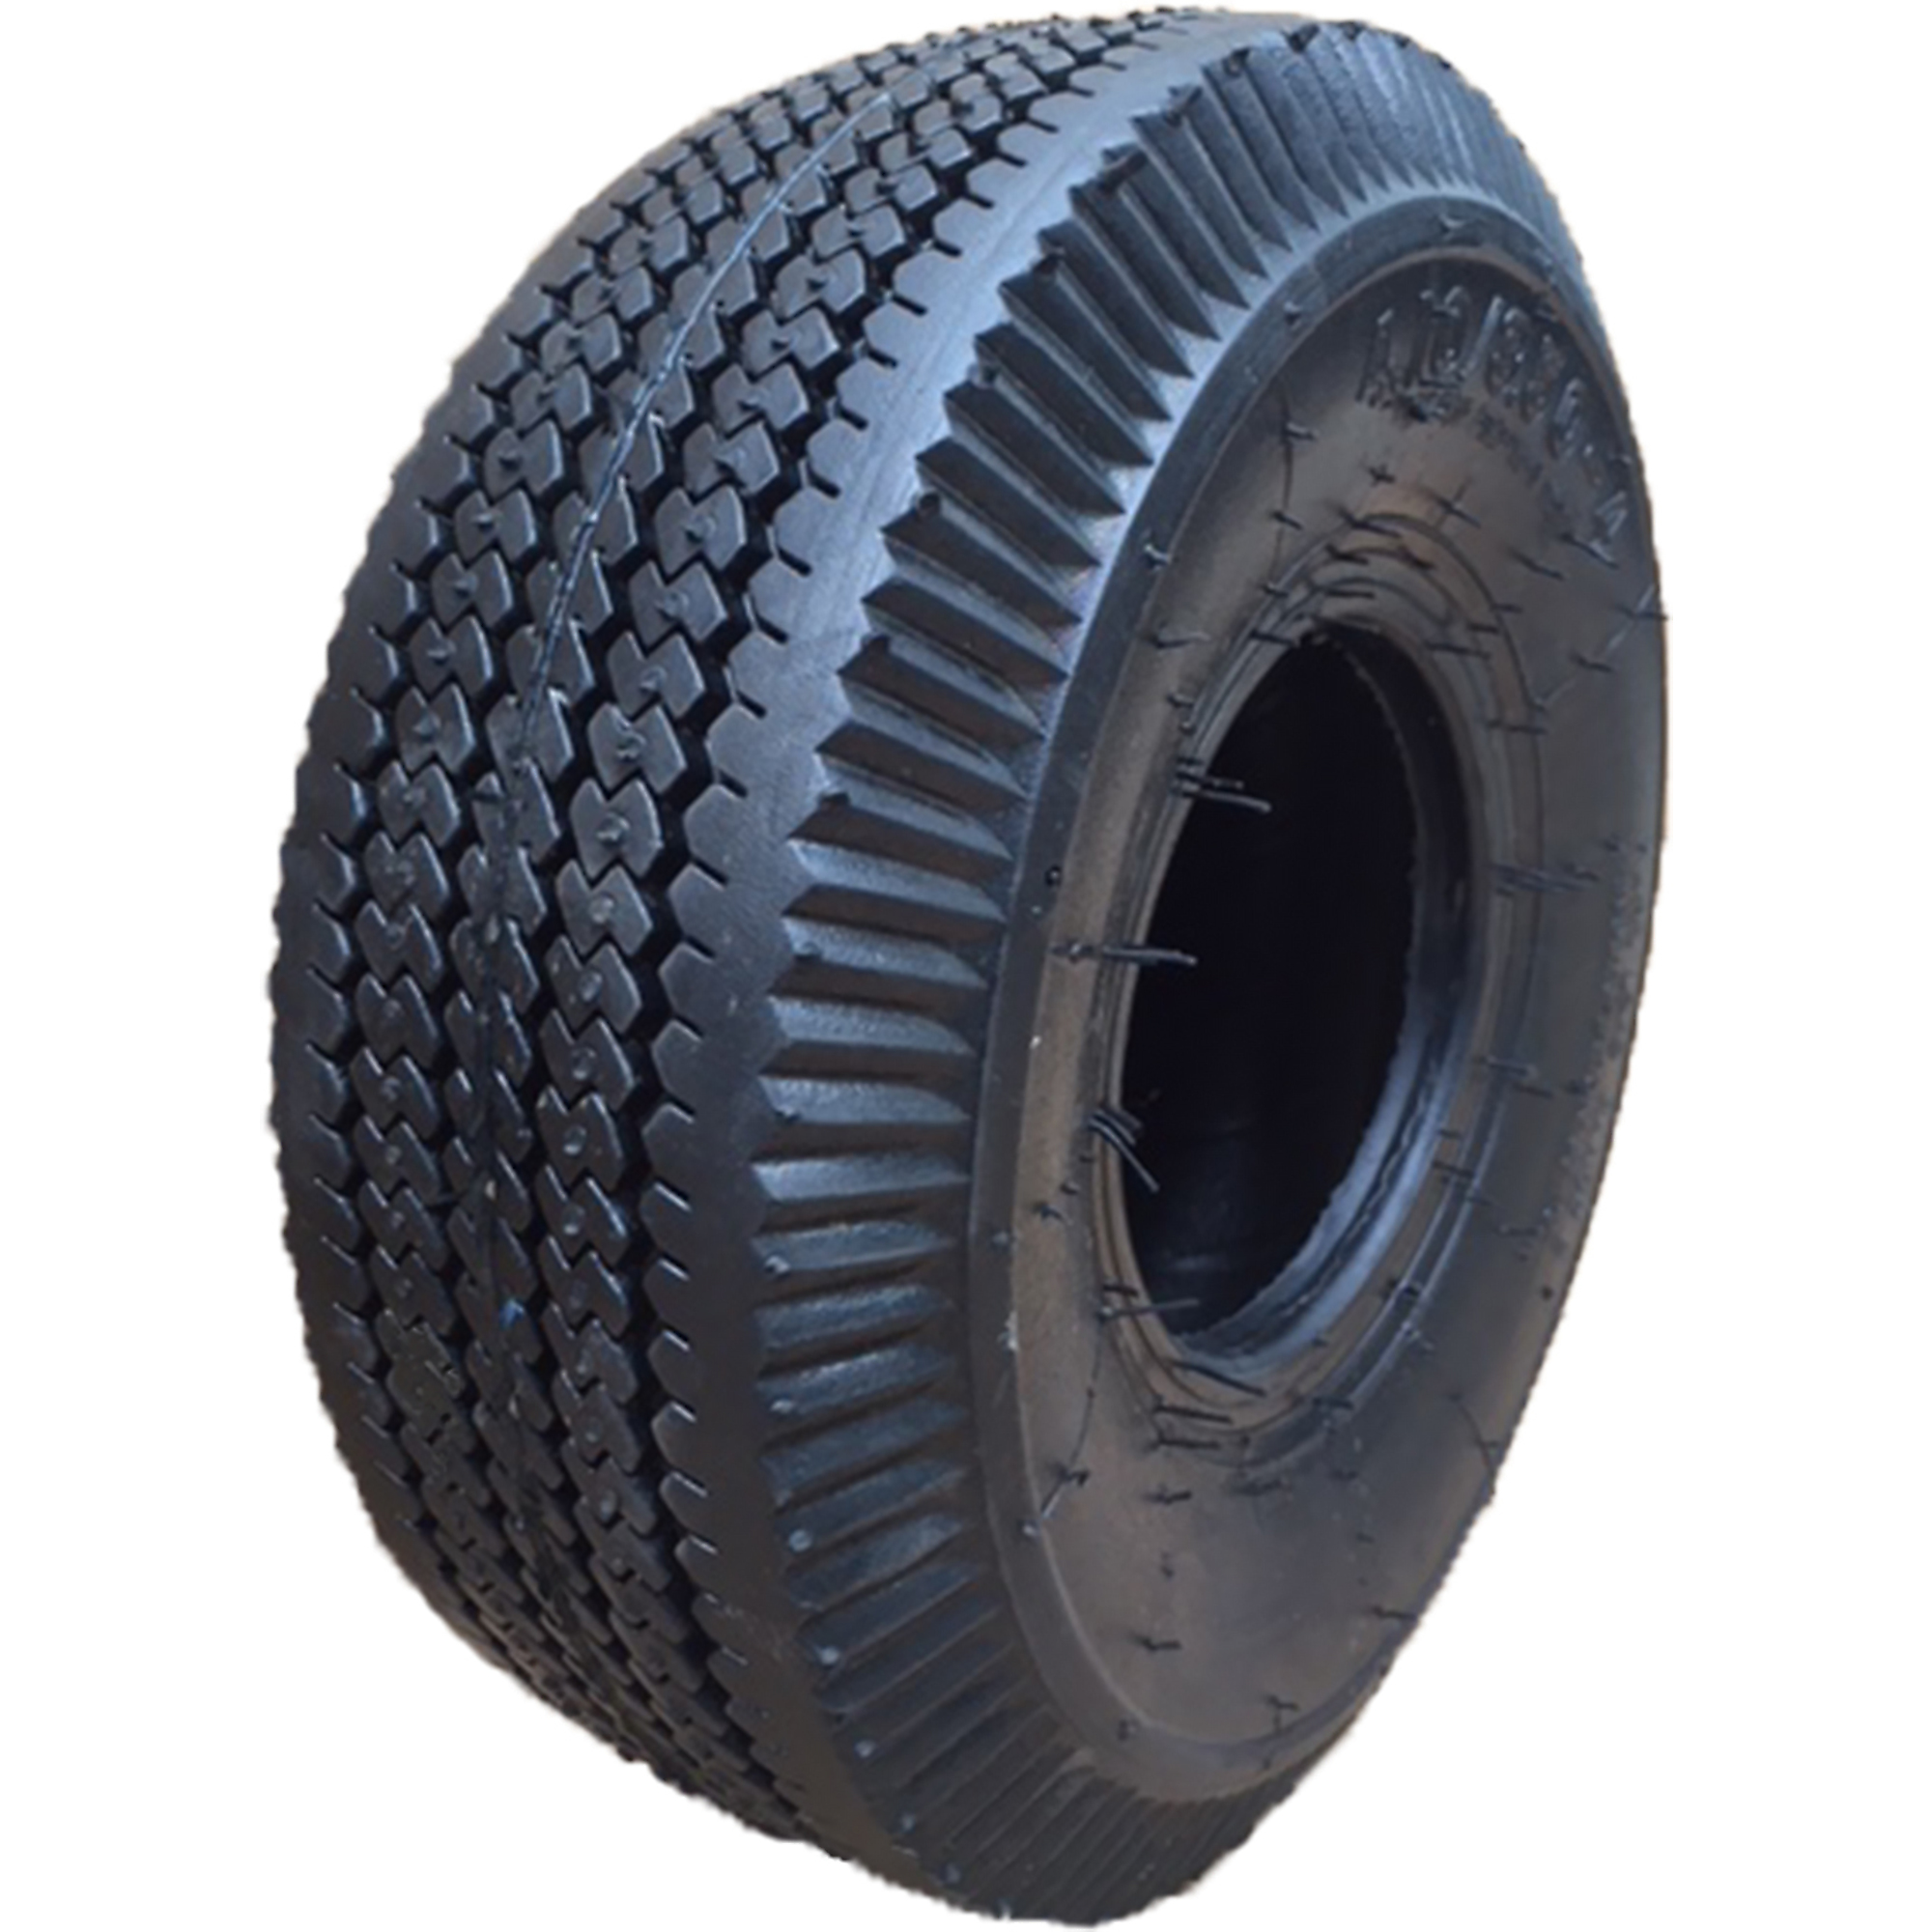 HI-RUN, Wheel Barrow Tire, Sawtooth, Tire Size 4.10/3.50-4 Load Range Rating B, Model WD1304